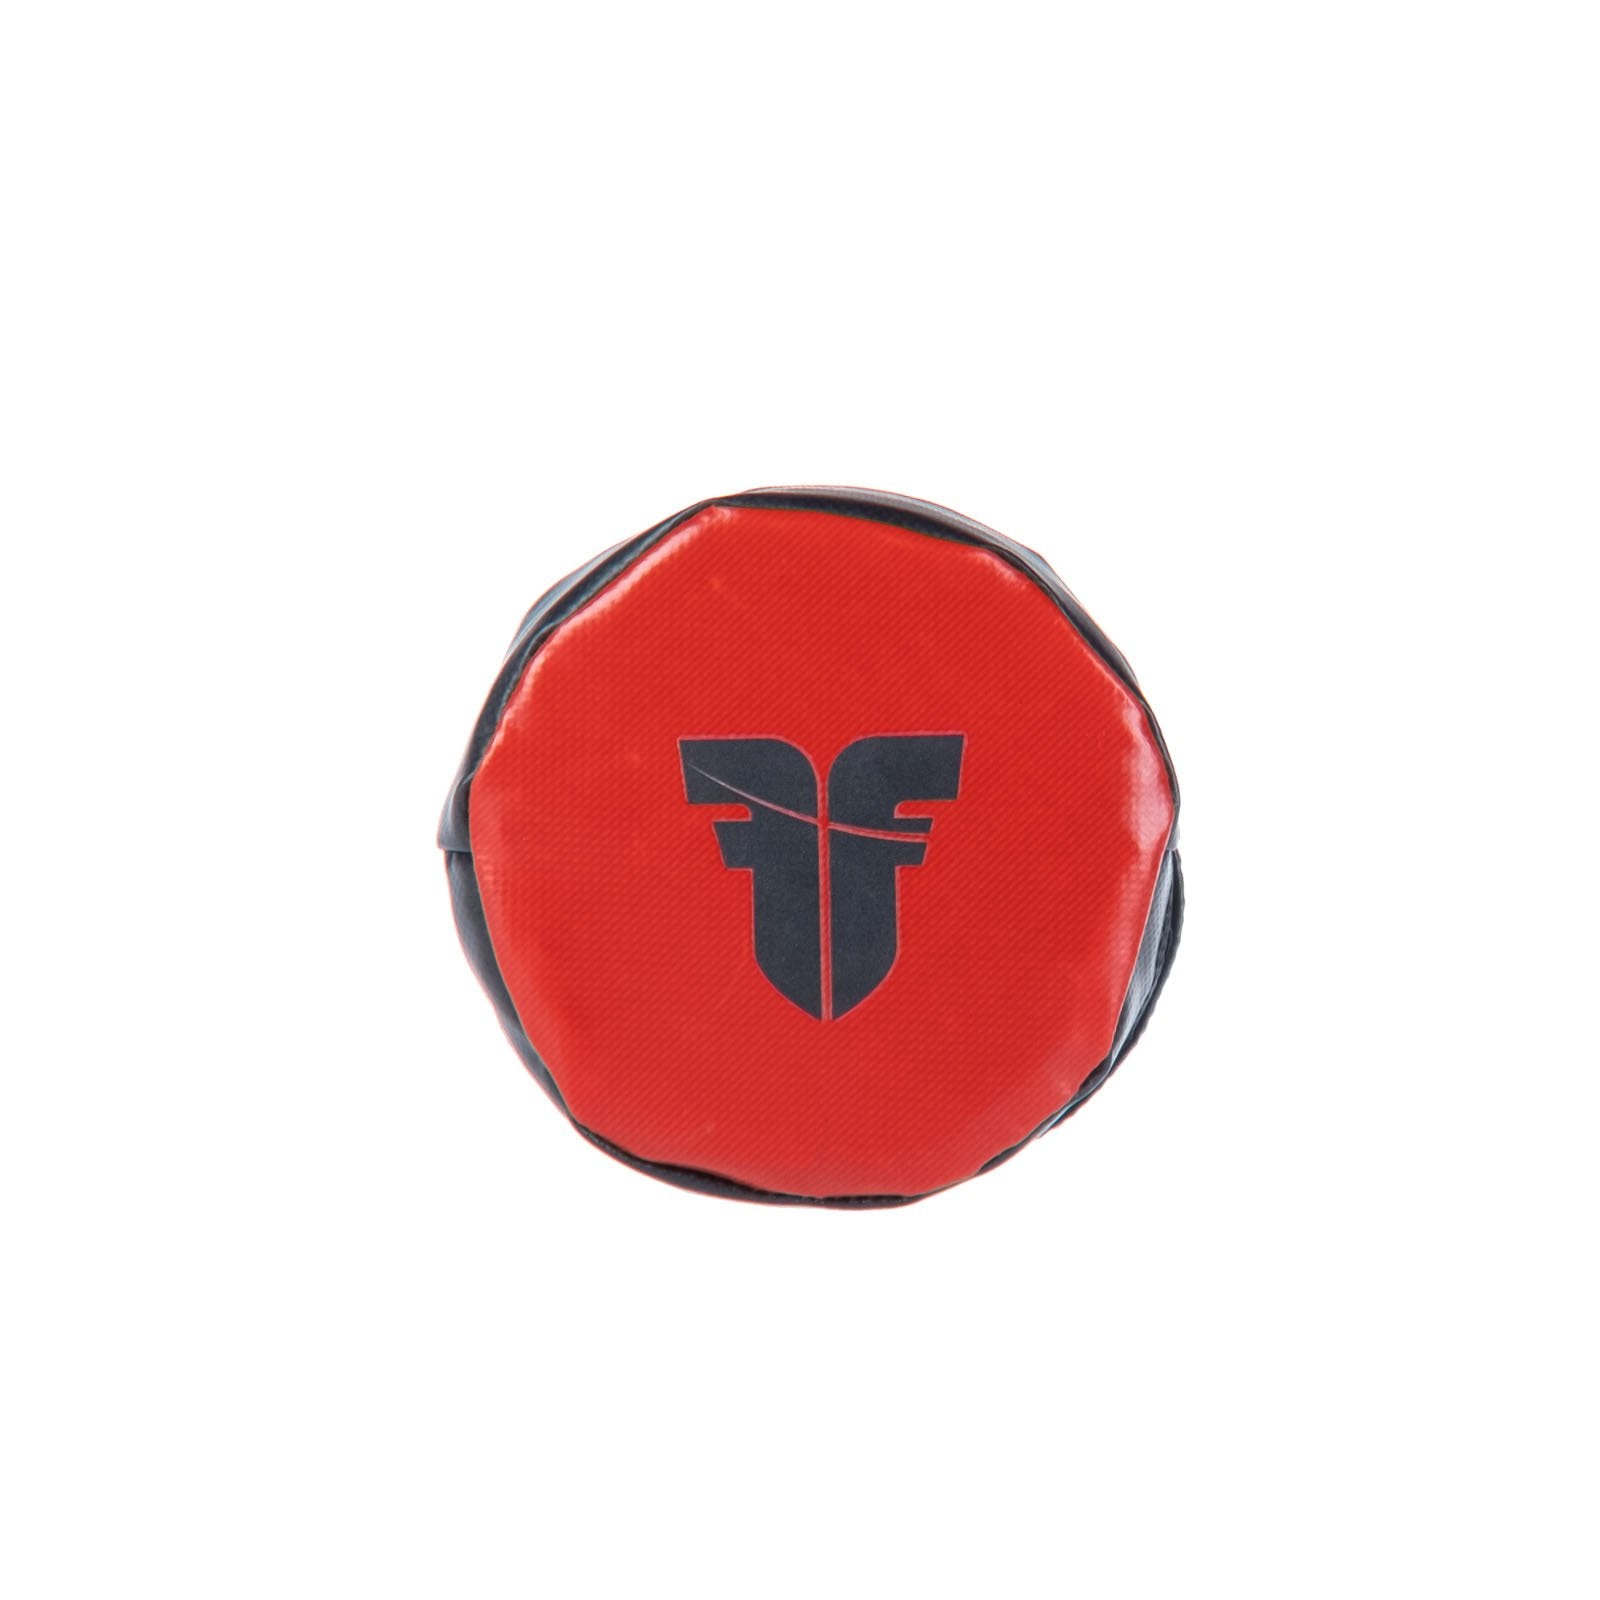 Training Power Wall - Mini Target - red